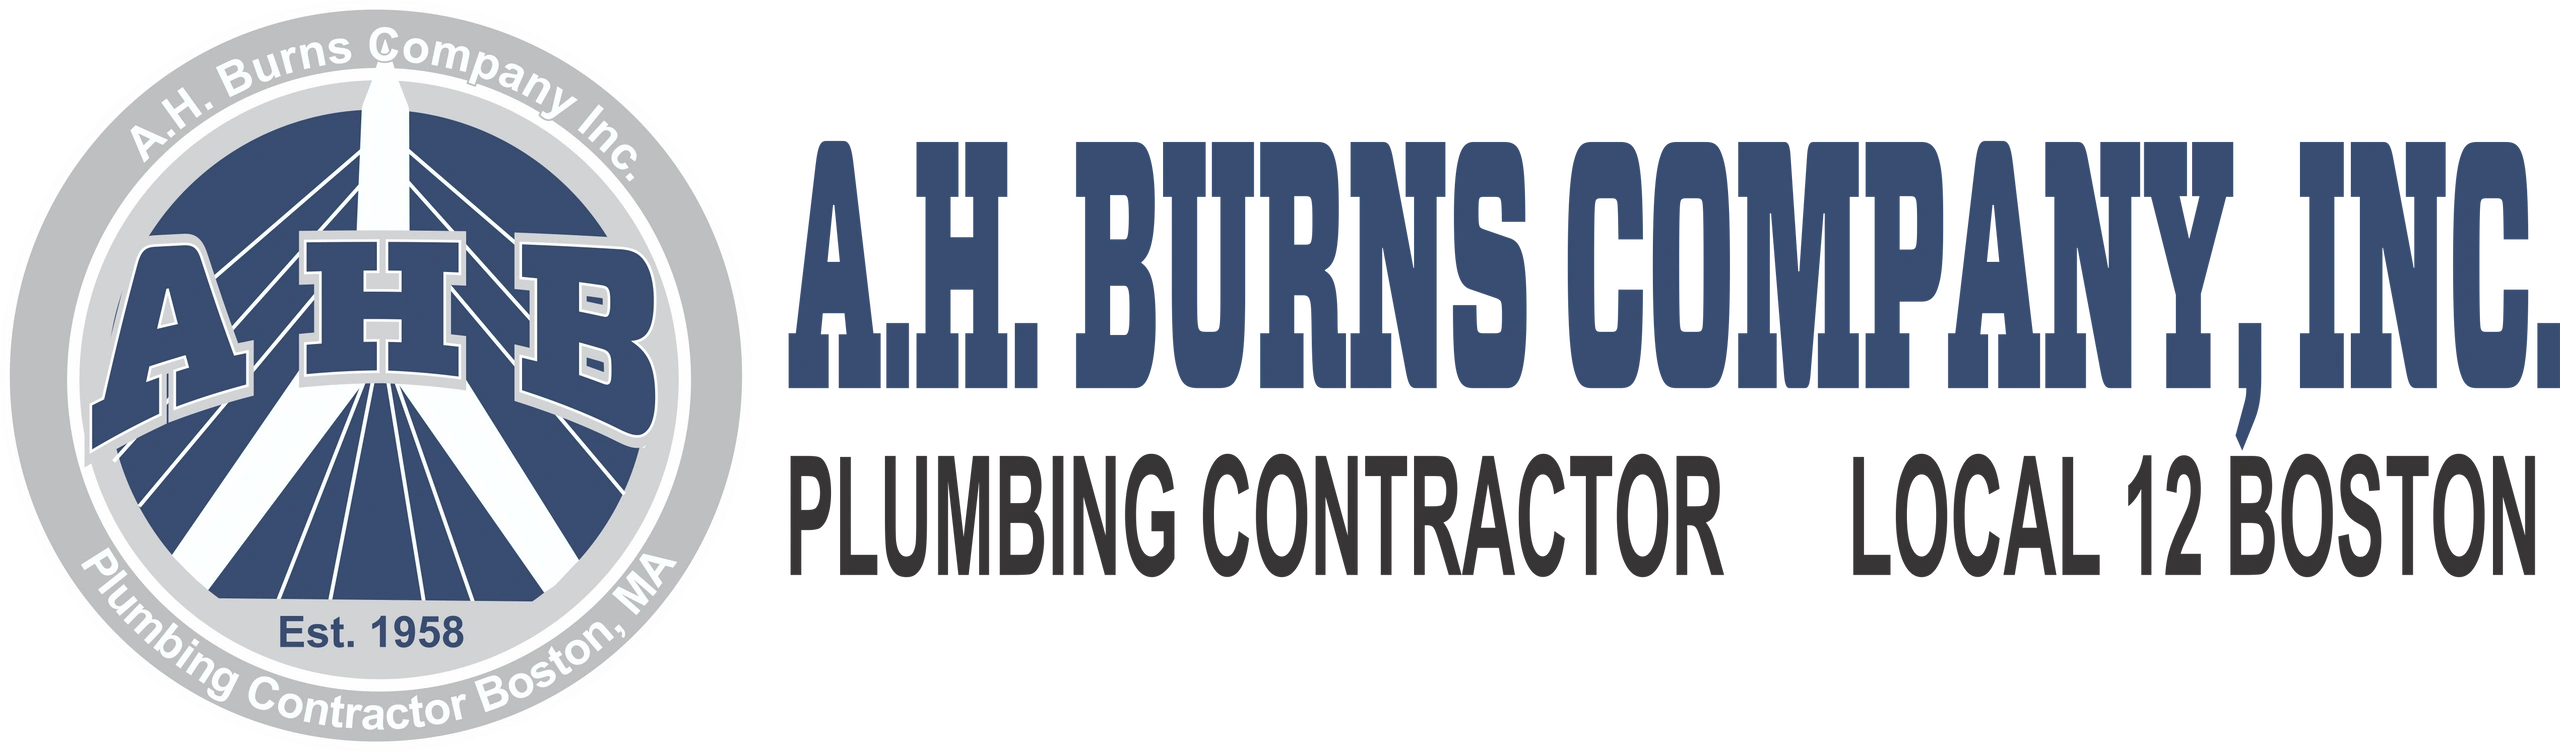 A.H. Burns Company, Inc logo Plumbing Contractor LOCAL 12 BOSTON